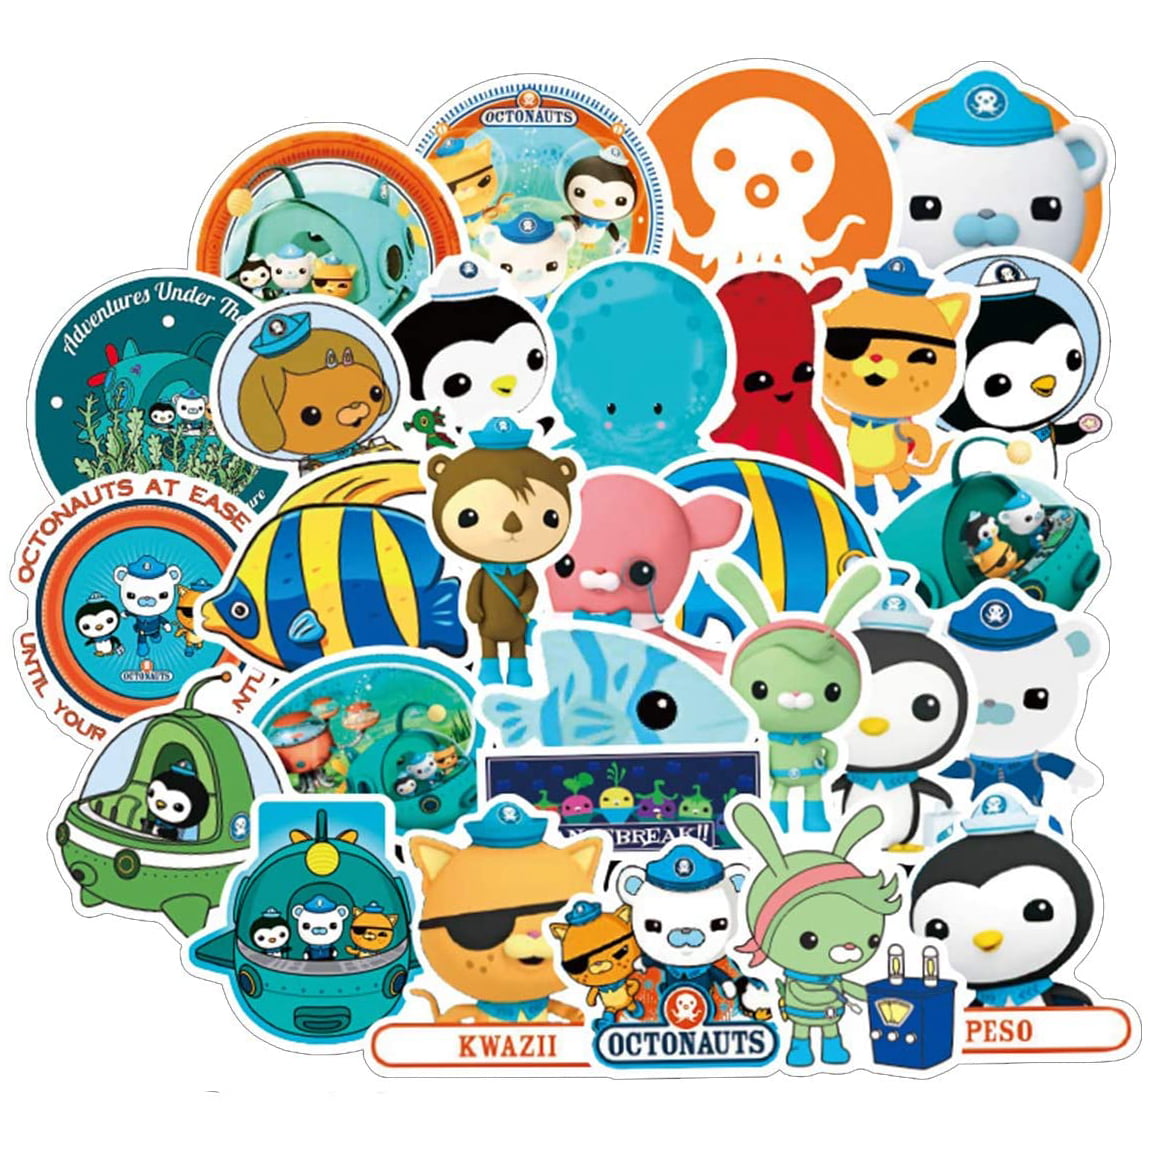 The Octonauts Sticker Pack Of 50 Stickers Waterproof Durable Stickers Classic Cartoon Anime Stickers For Laptops Computers Water Bottles The Octonauts Walmart Com Walmart Com